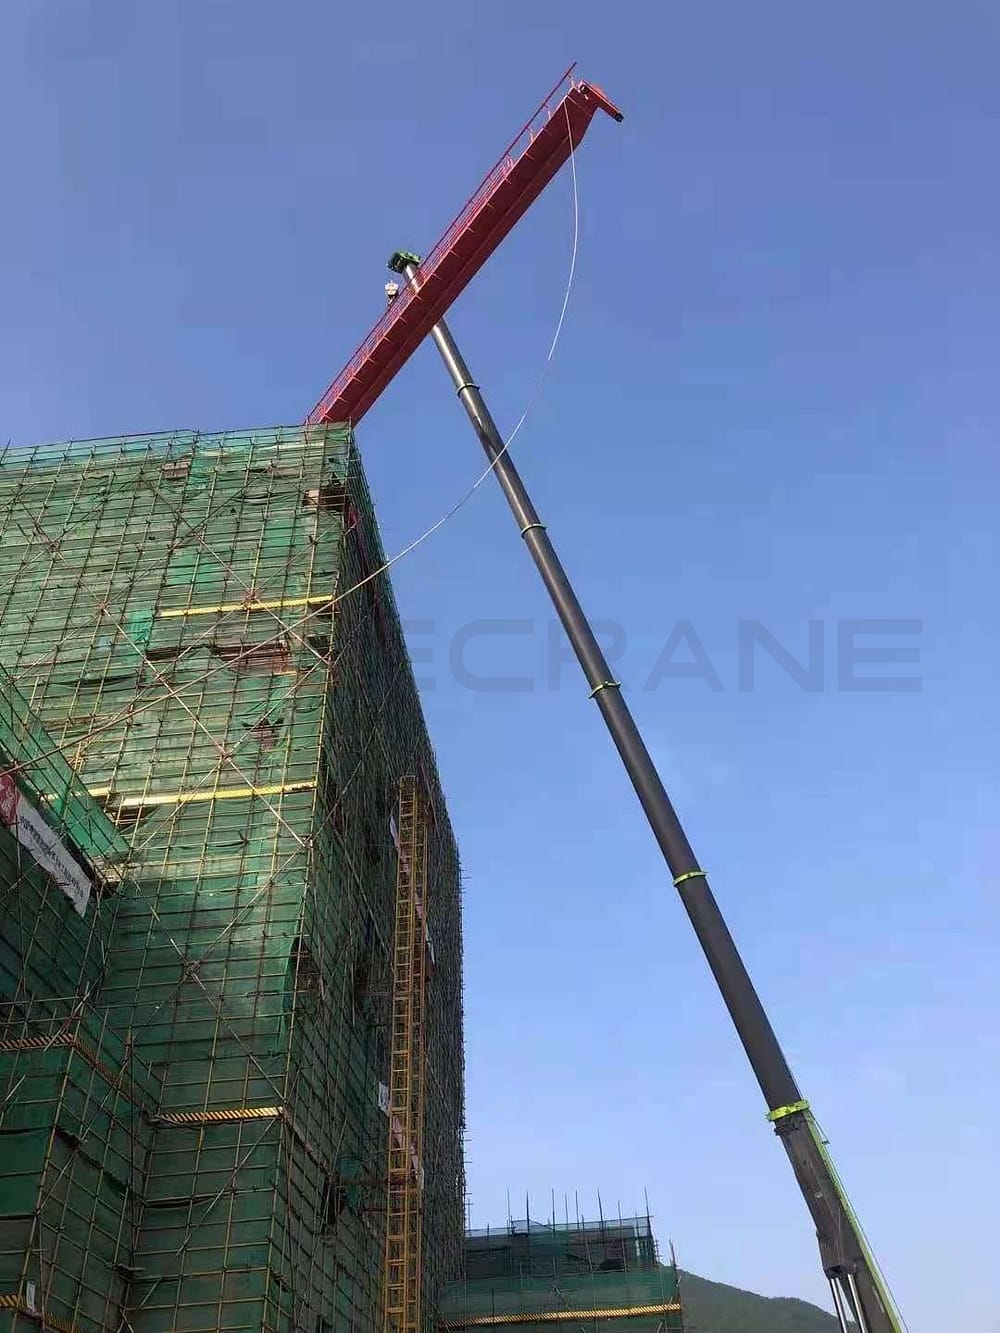 Install the crane beam